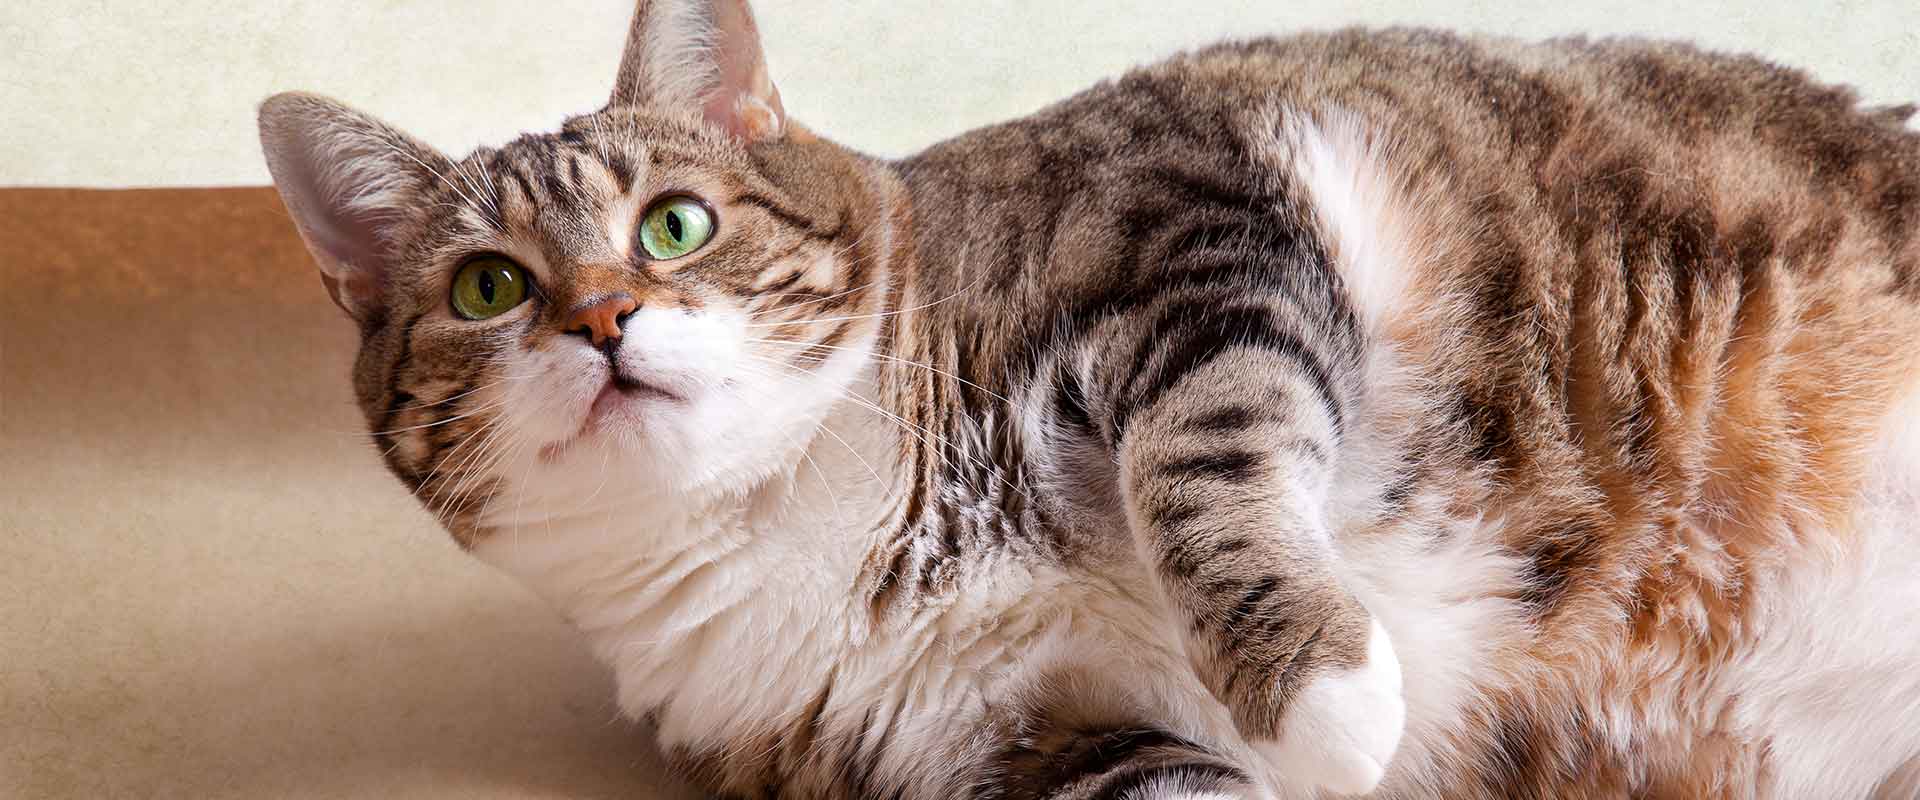 hueco ellos autómata Controla el peso de tu gato. ¿Necesita dieta? - Hospital Veterinario NM